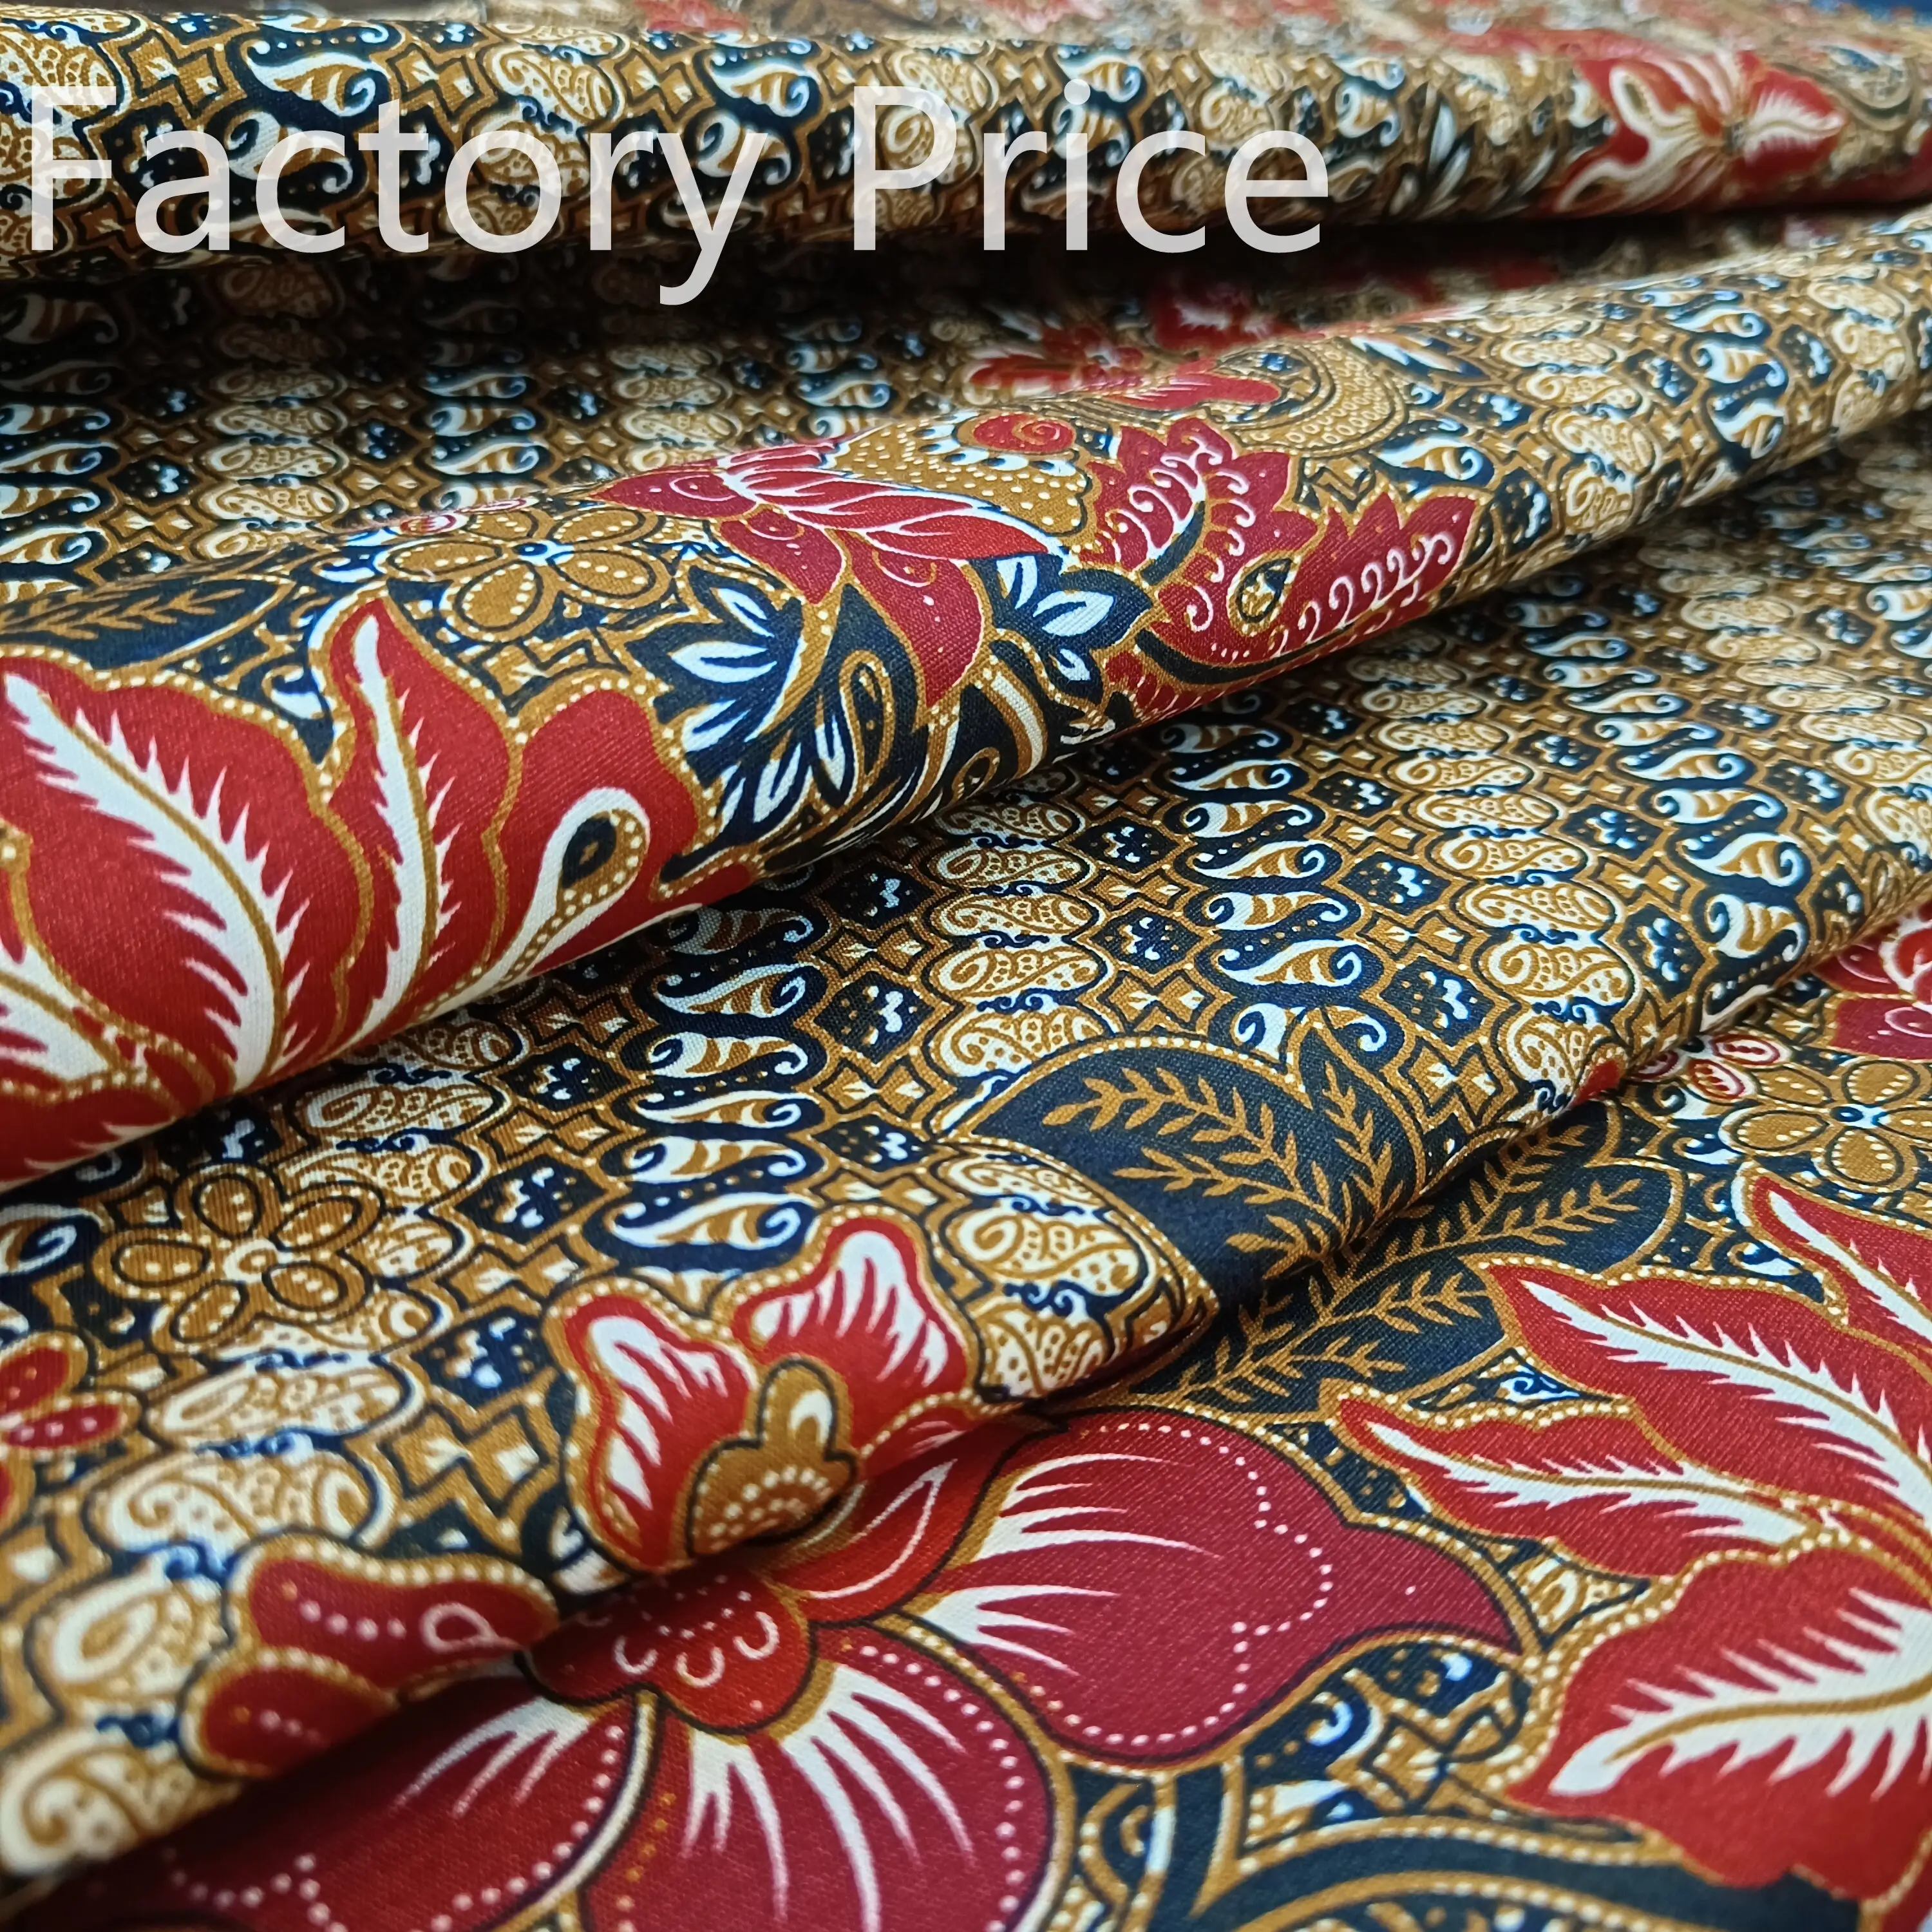 Werkspreis Sarong/ batik Stoff Polyester aufgedruckt traditioneller batik Stoff Rohrrock Sarong